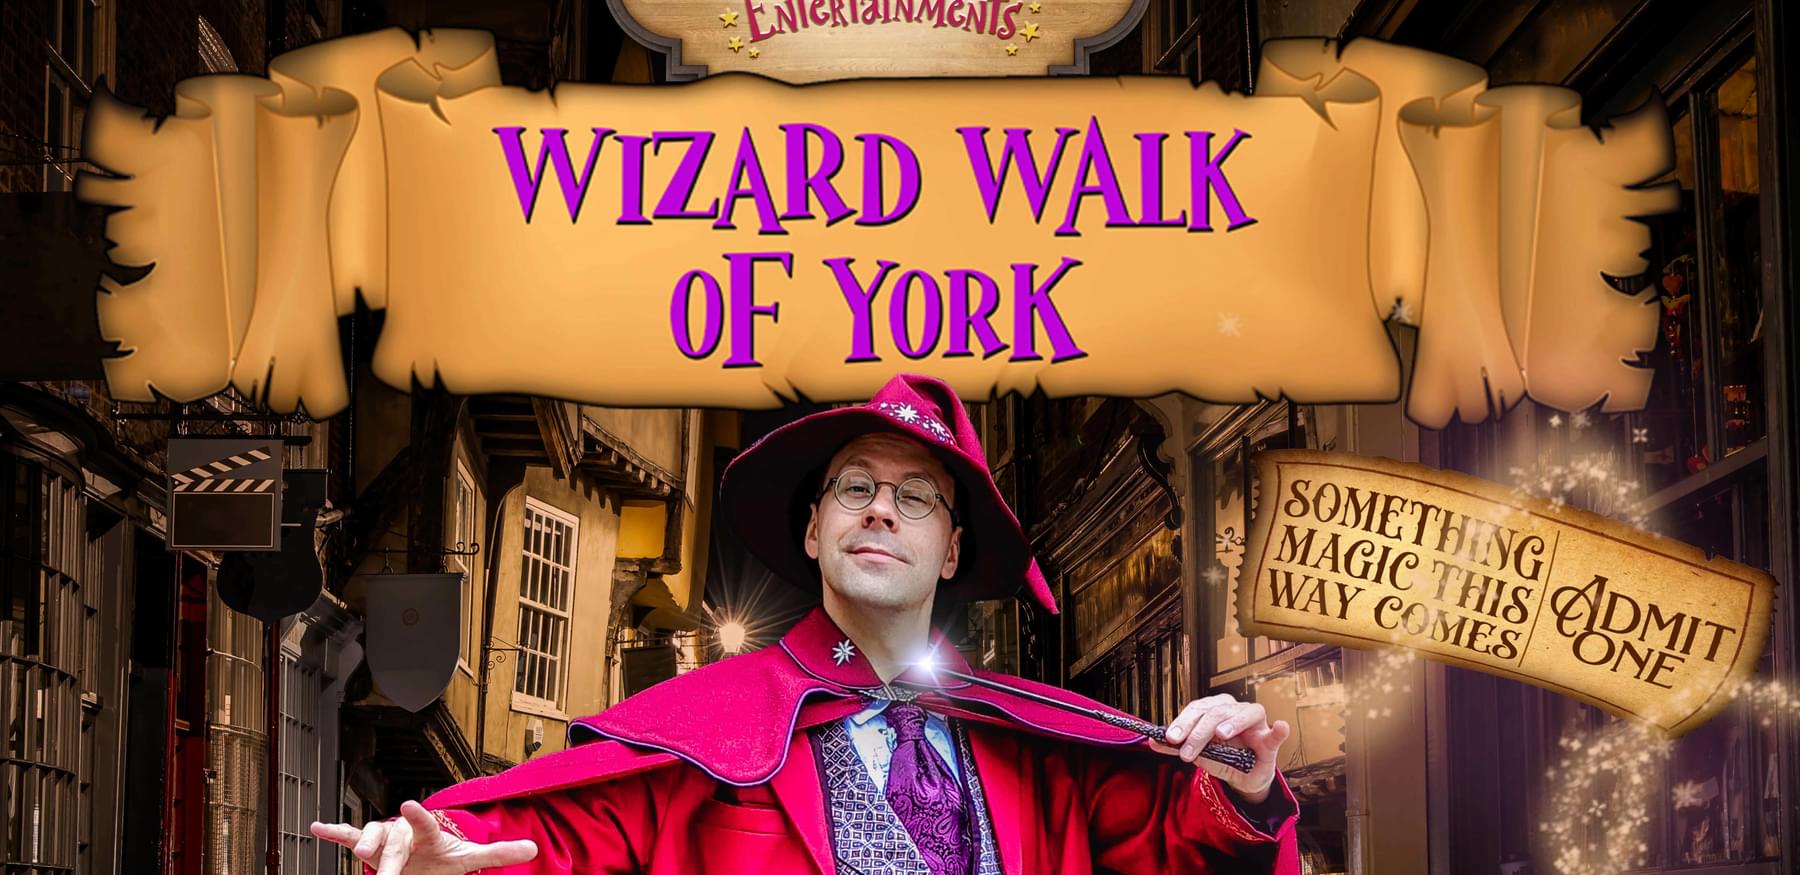 1 Visit York cover image 2 Wizard Walk of York